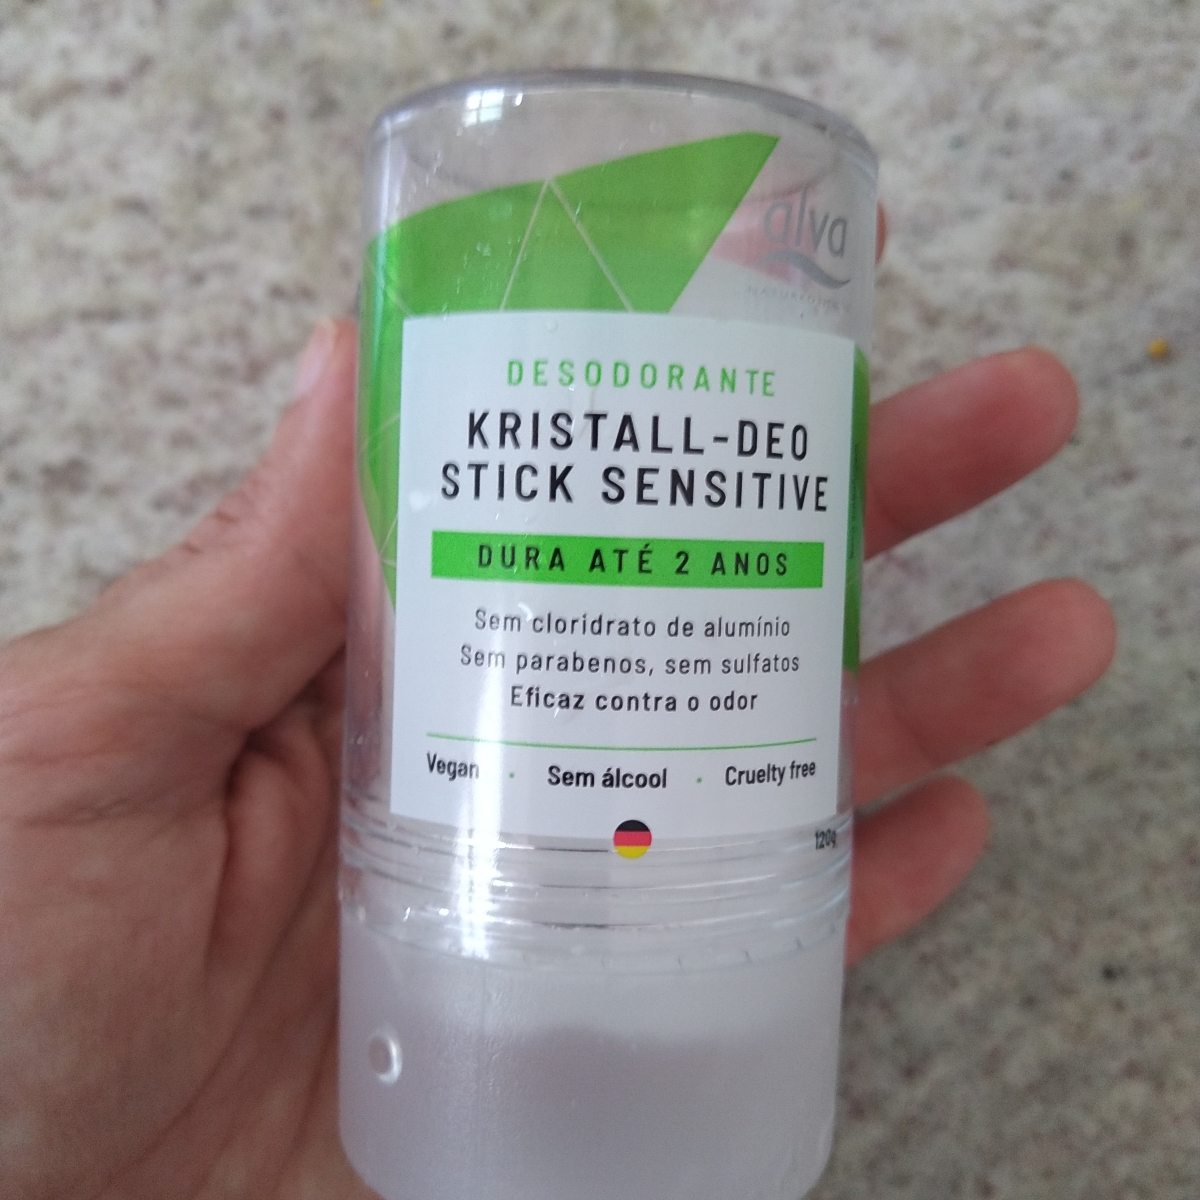 Alva Desodorante Kristall-Deo stick sensitive Review | abillion